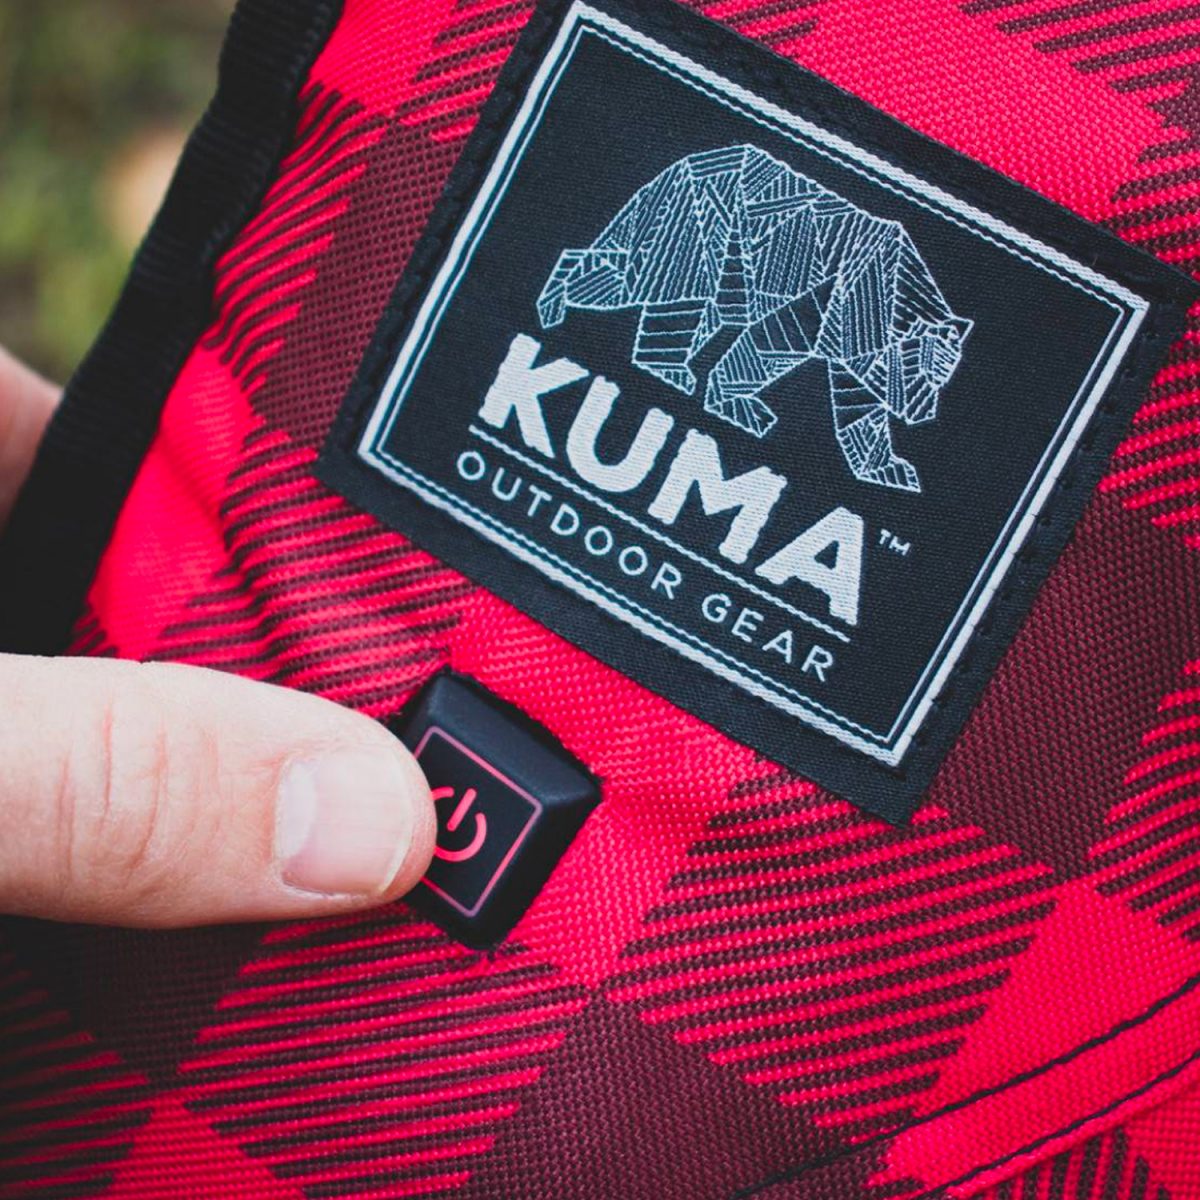 kuma heated. lazy bear chair button closeup